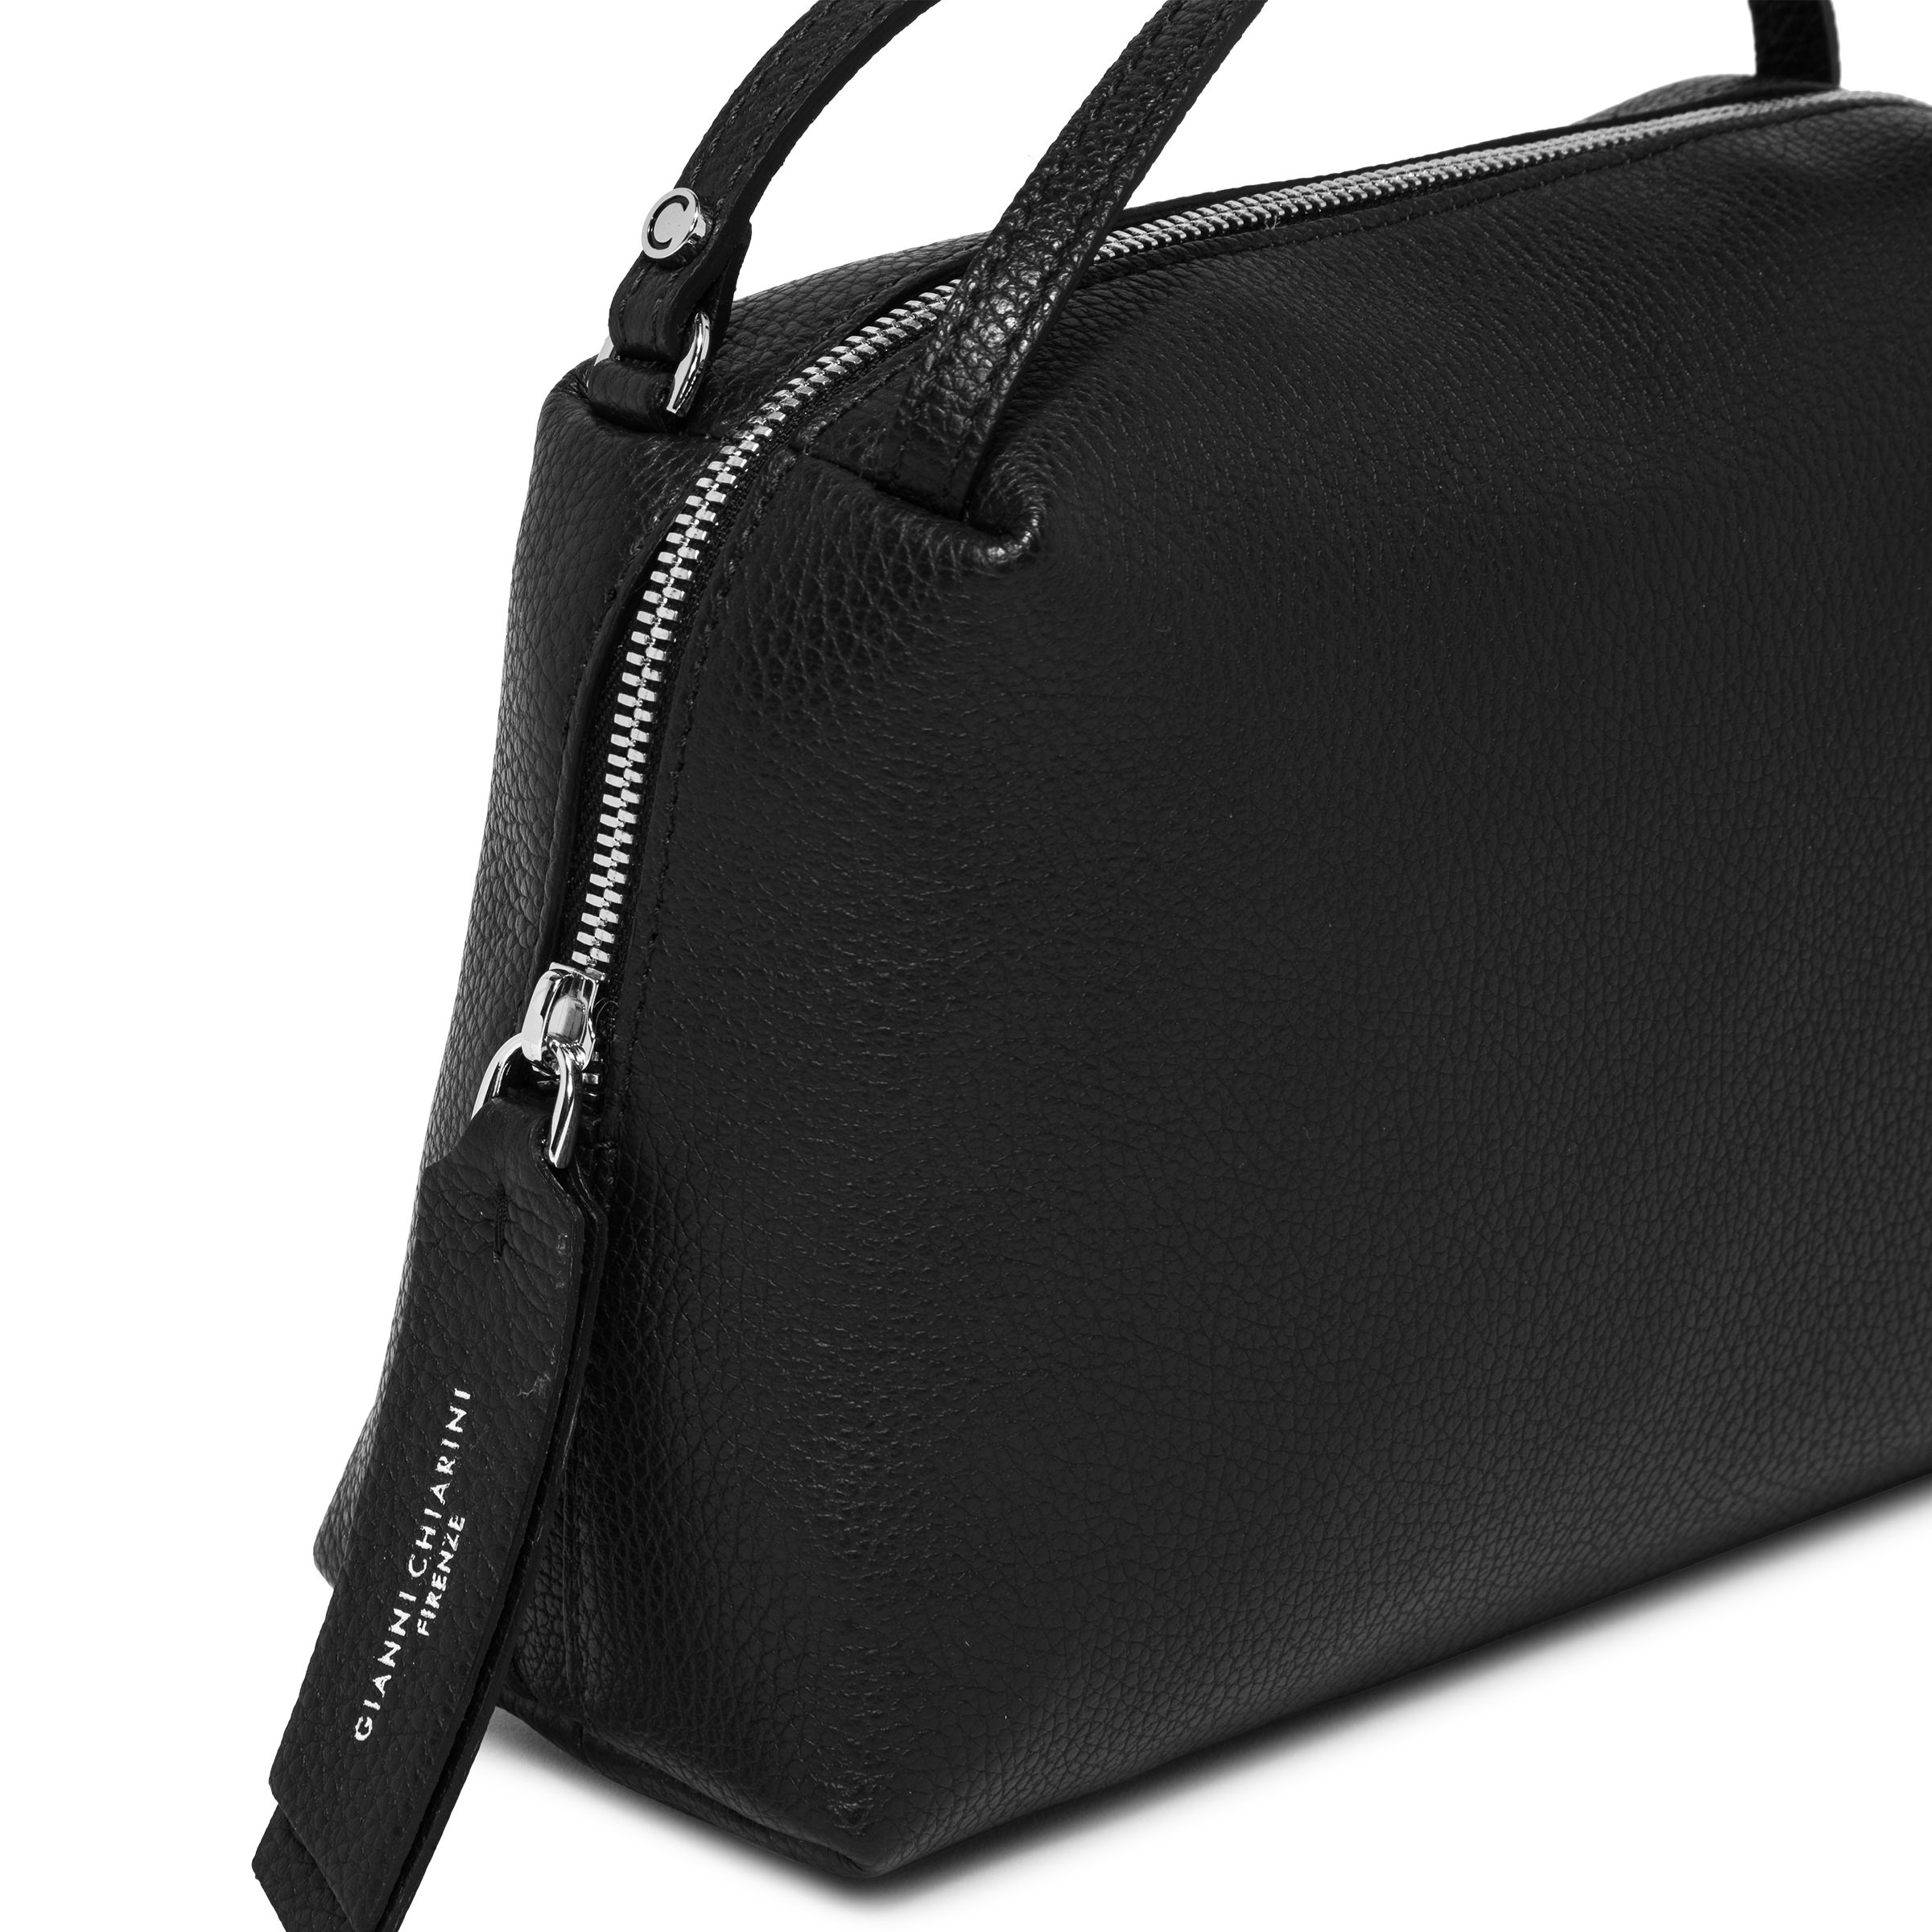 Gianni Chiarini - Alifa bag in leather, Black, large image number 3